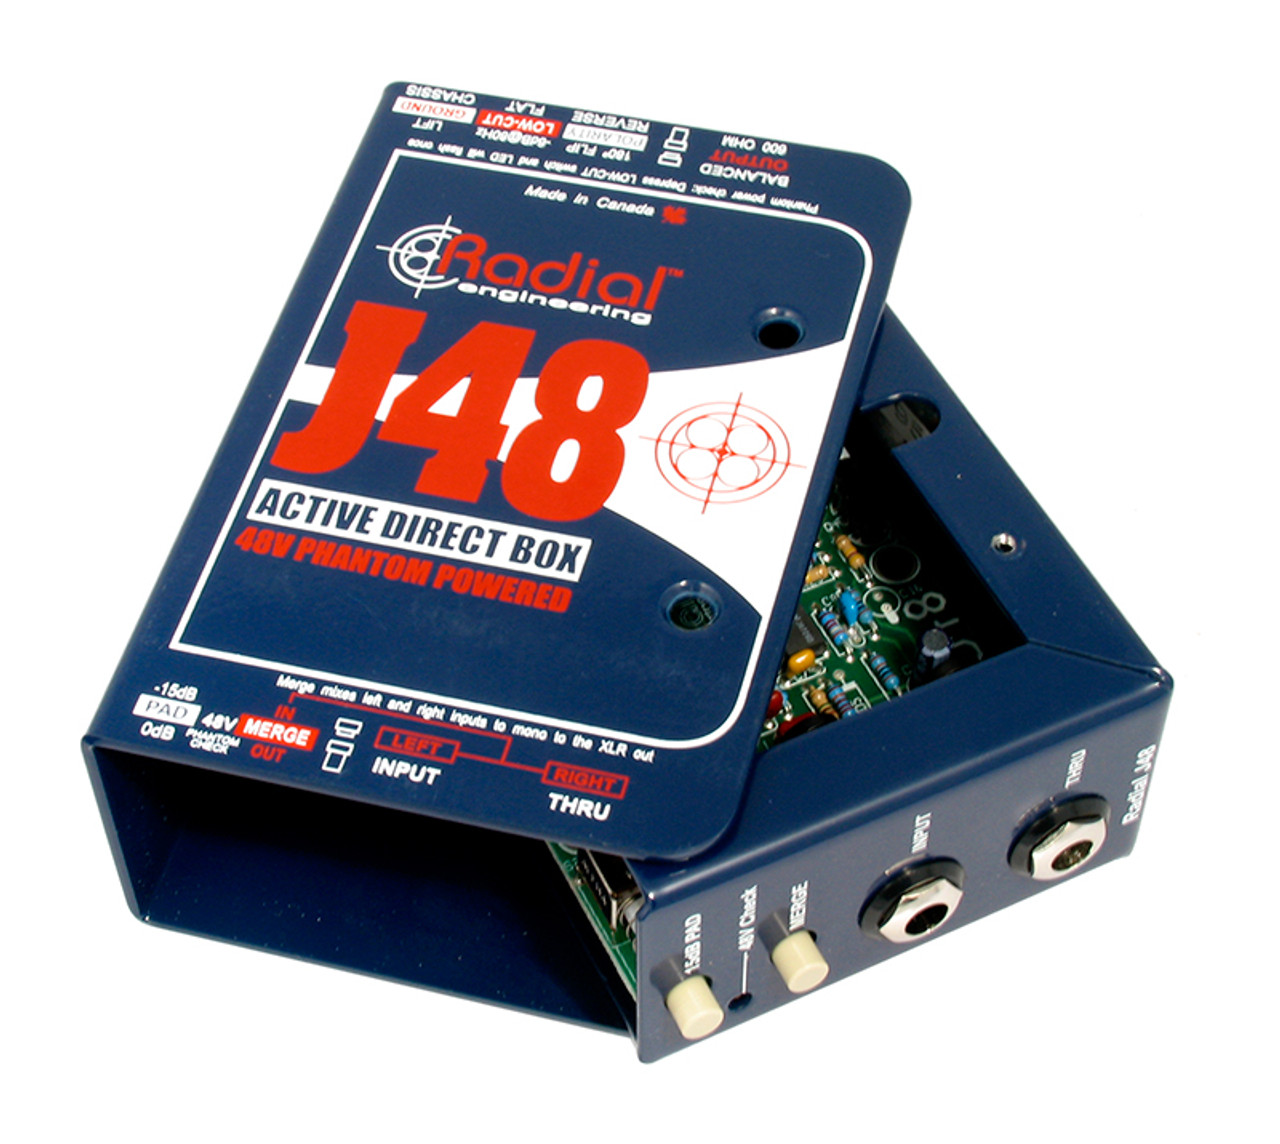 Radial J48 Active phantom powered direct box - mono - Absolute Music